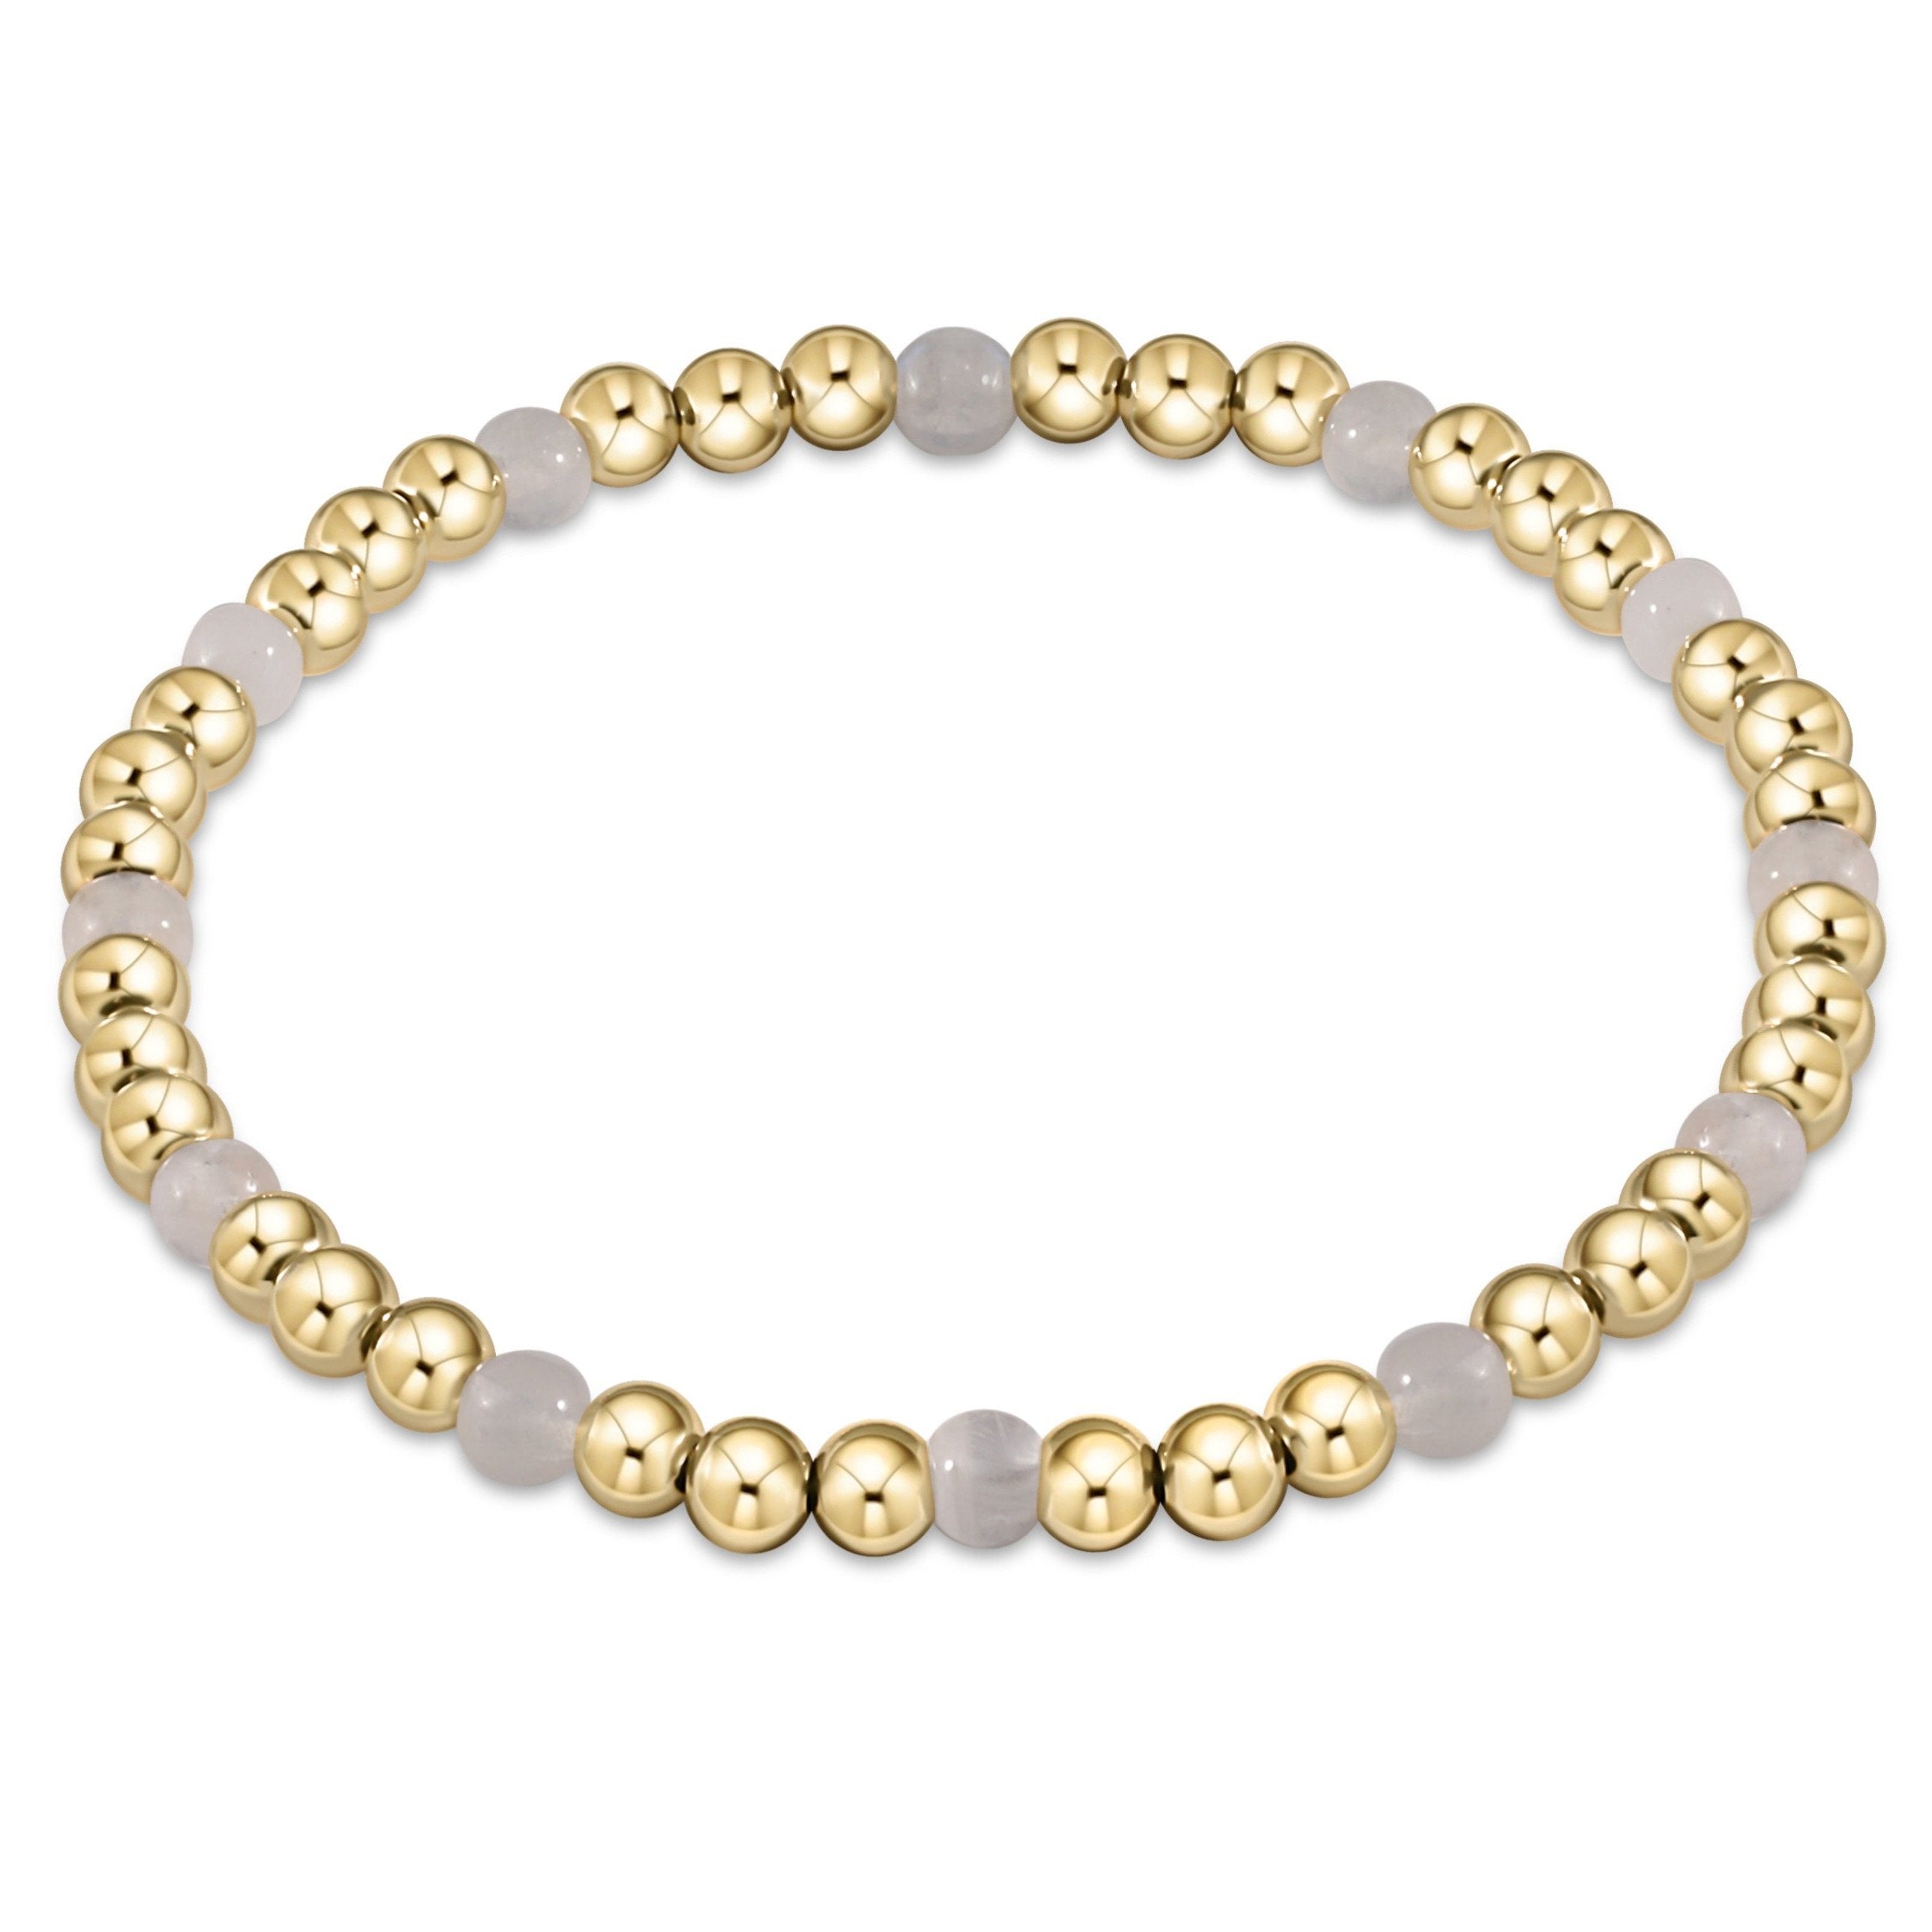 Sincerity Gold Bead Bracelet, 4mm - Moonstone